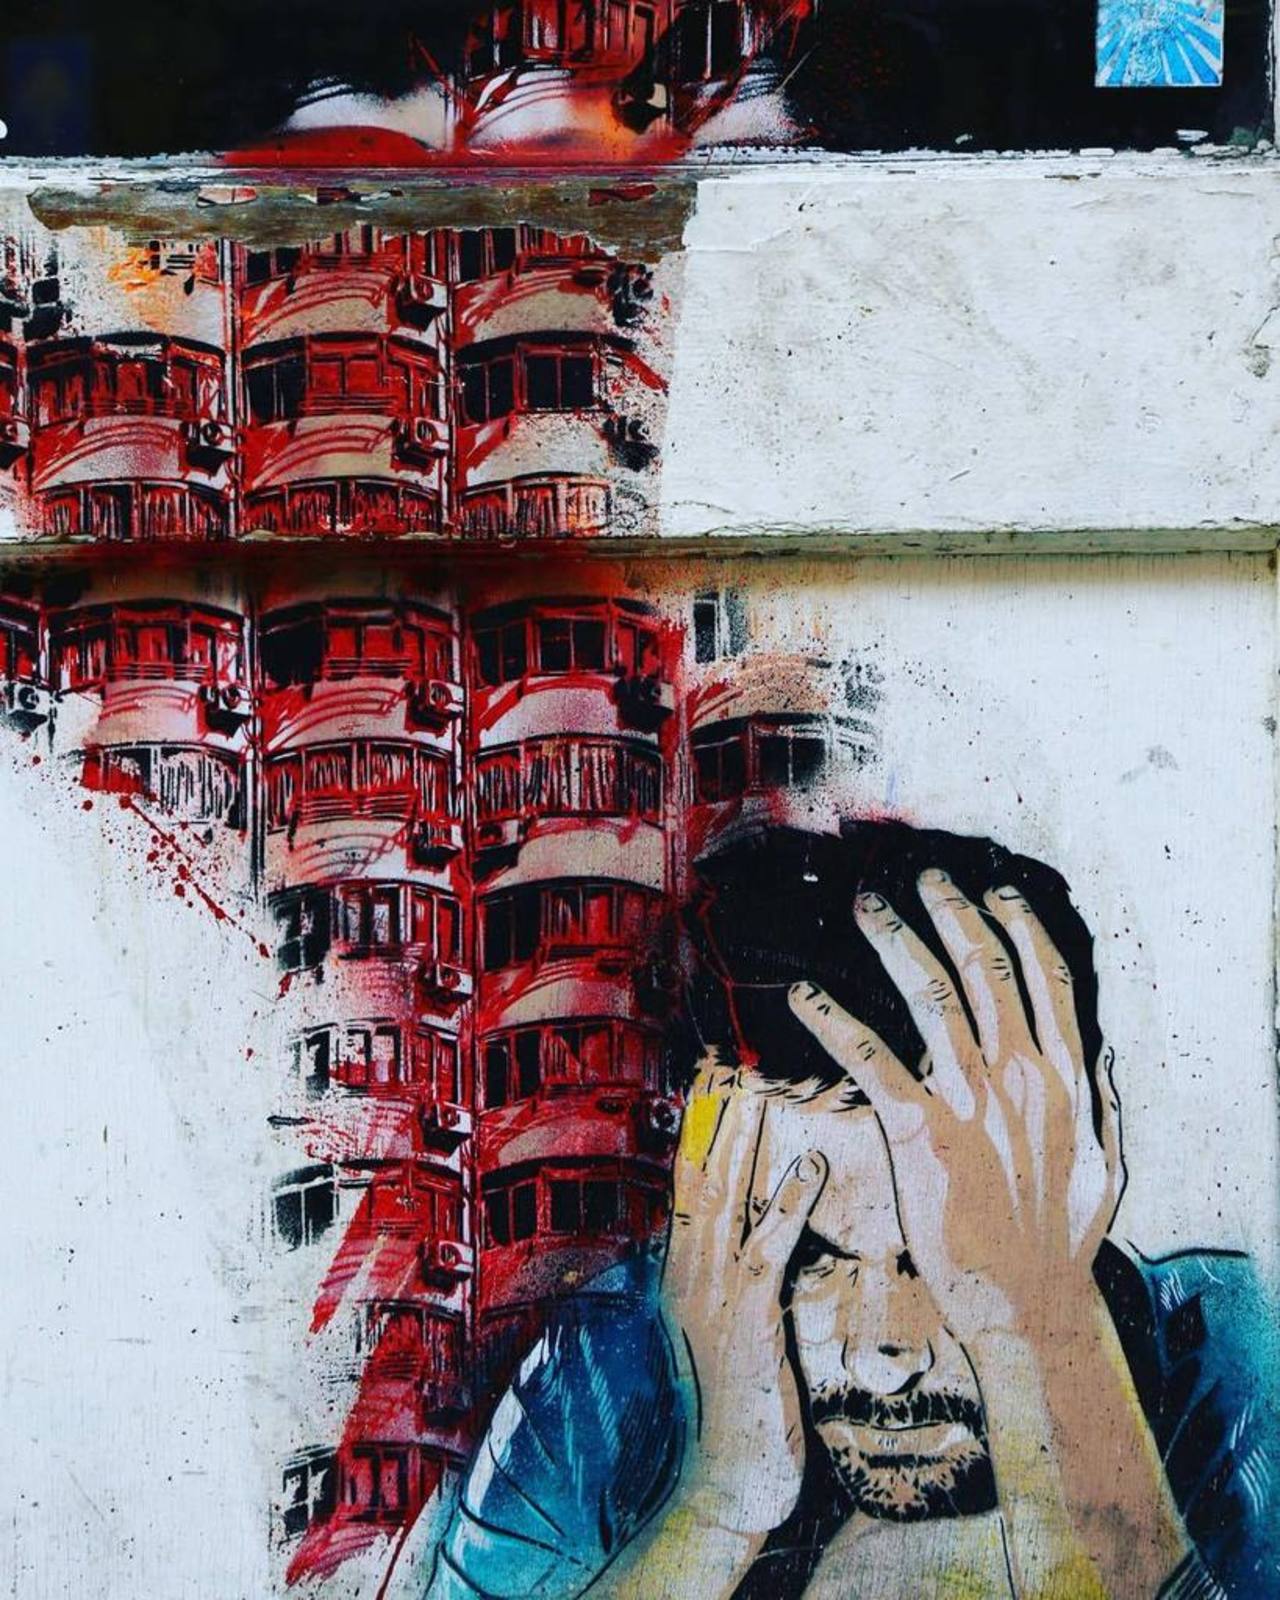 RT @artpushr: via #jackiehadel1 "http://ift.tt/1KHeprT" #graffiti #streetart http://t.co/Gy61bhDFES